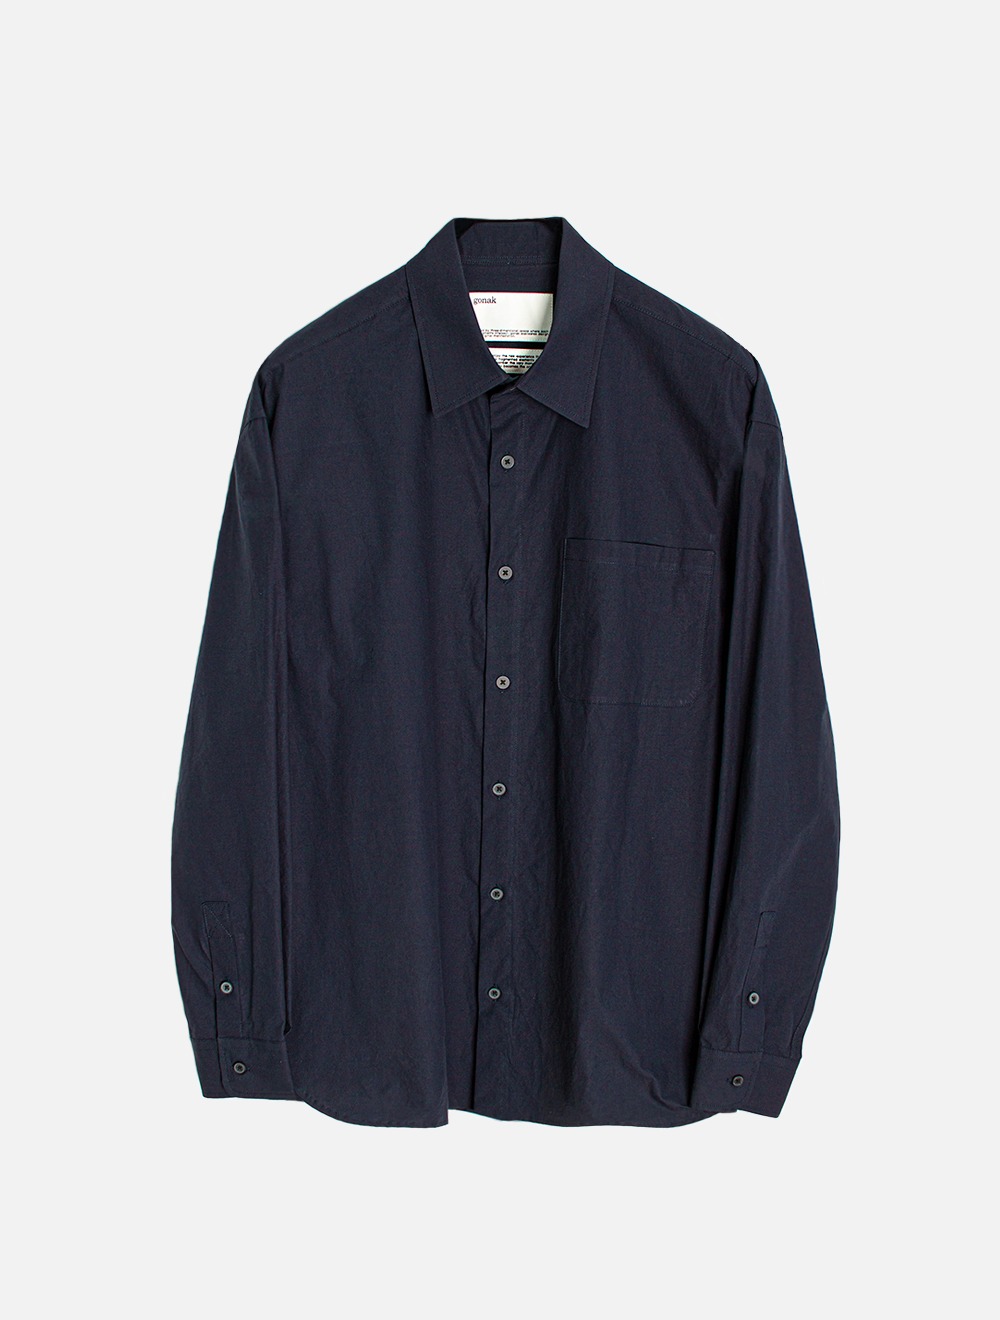 sage cotton shirt (navy)